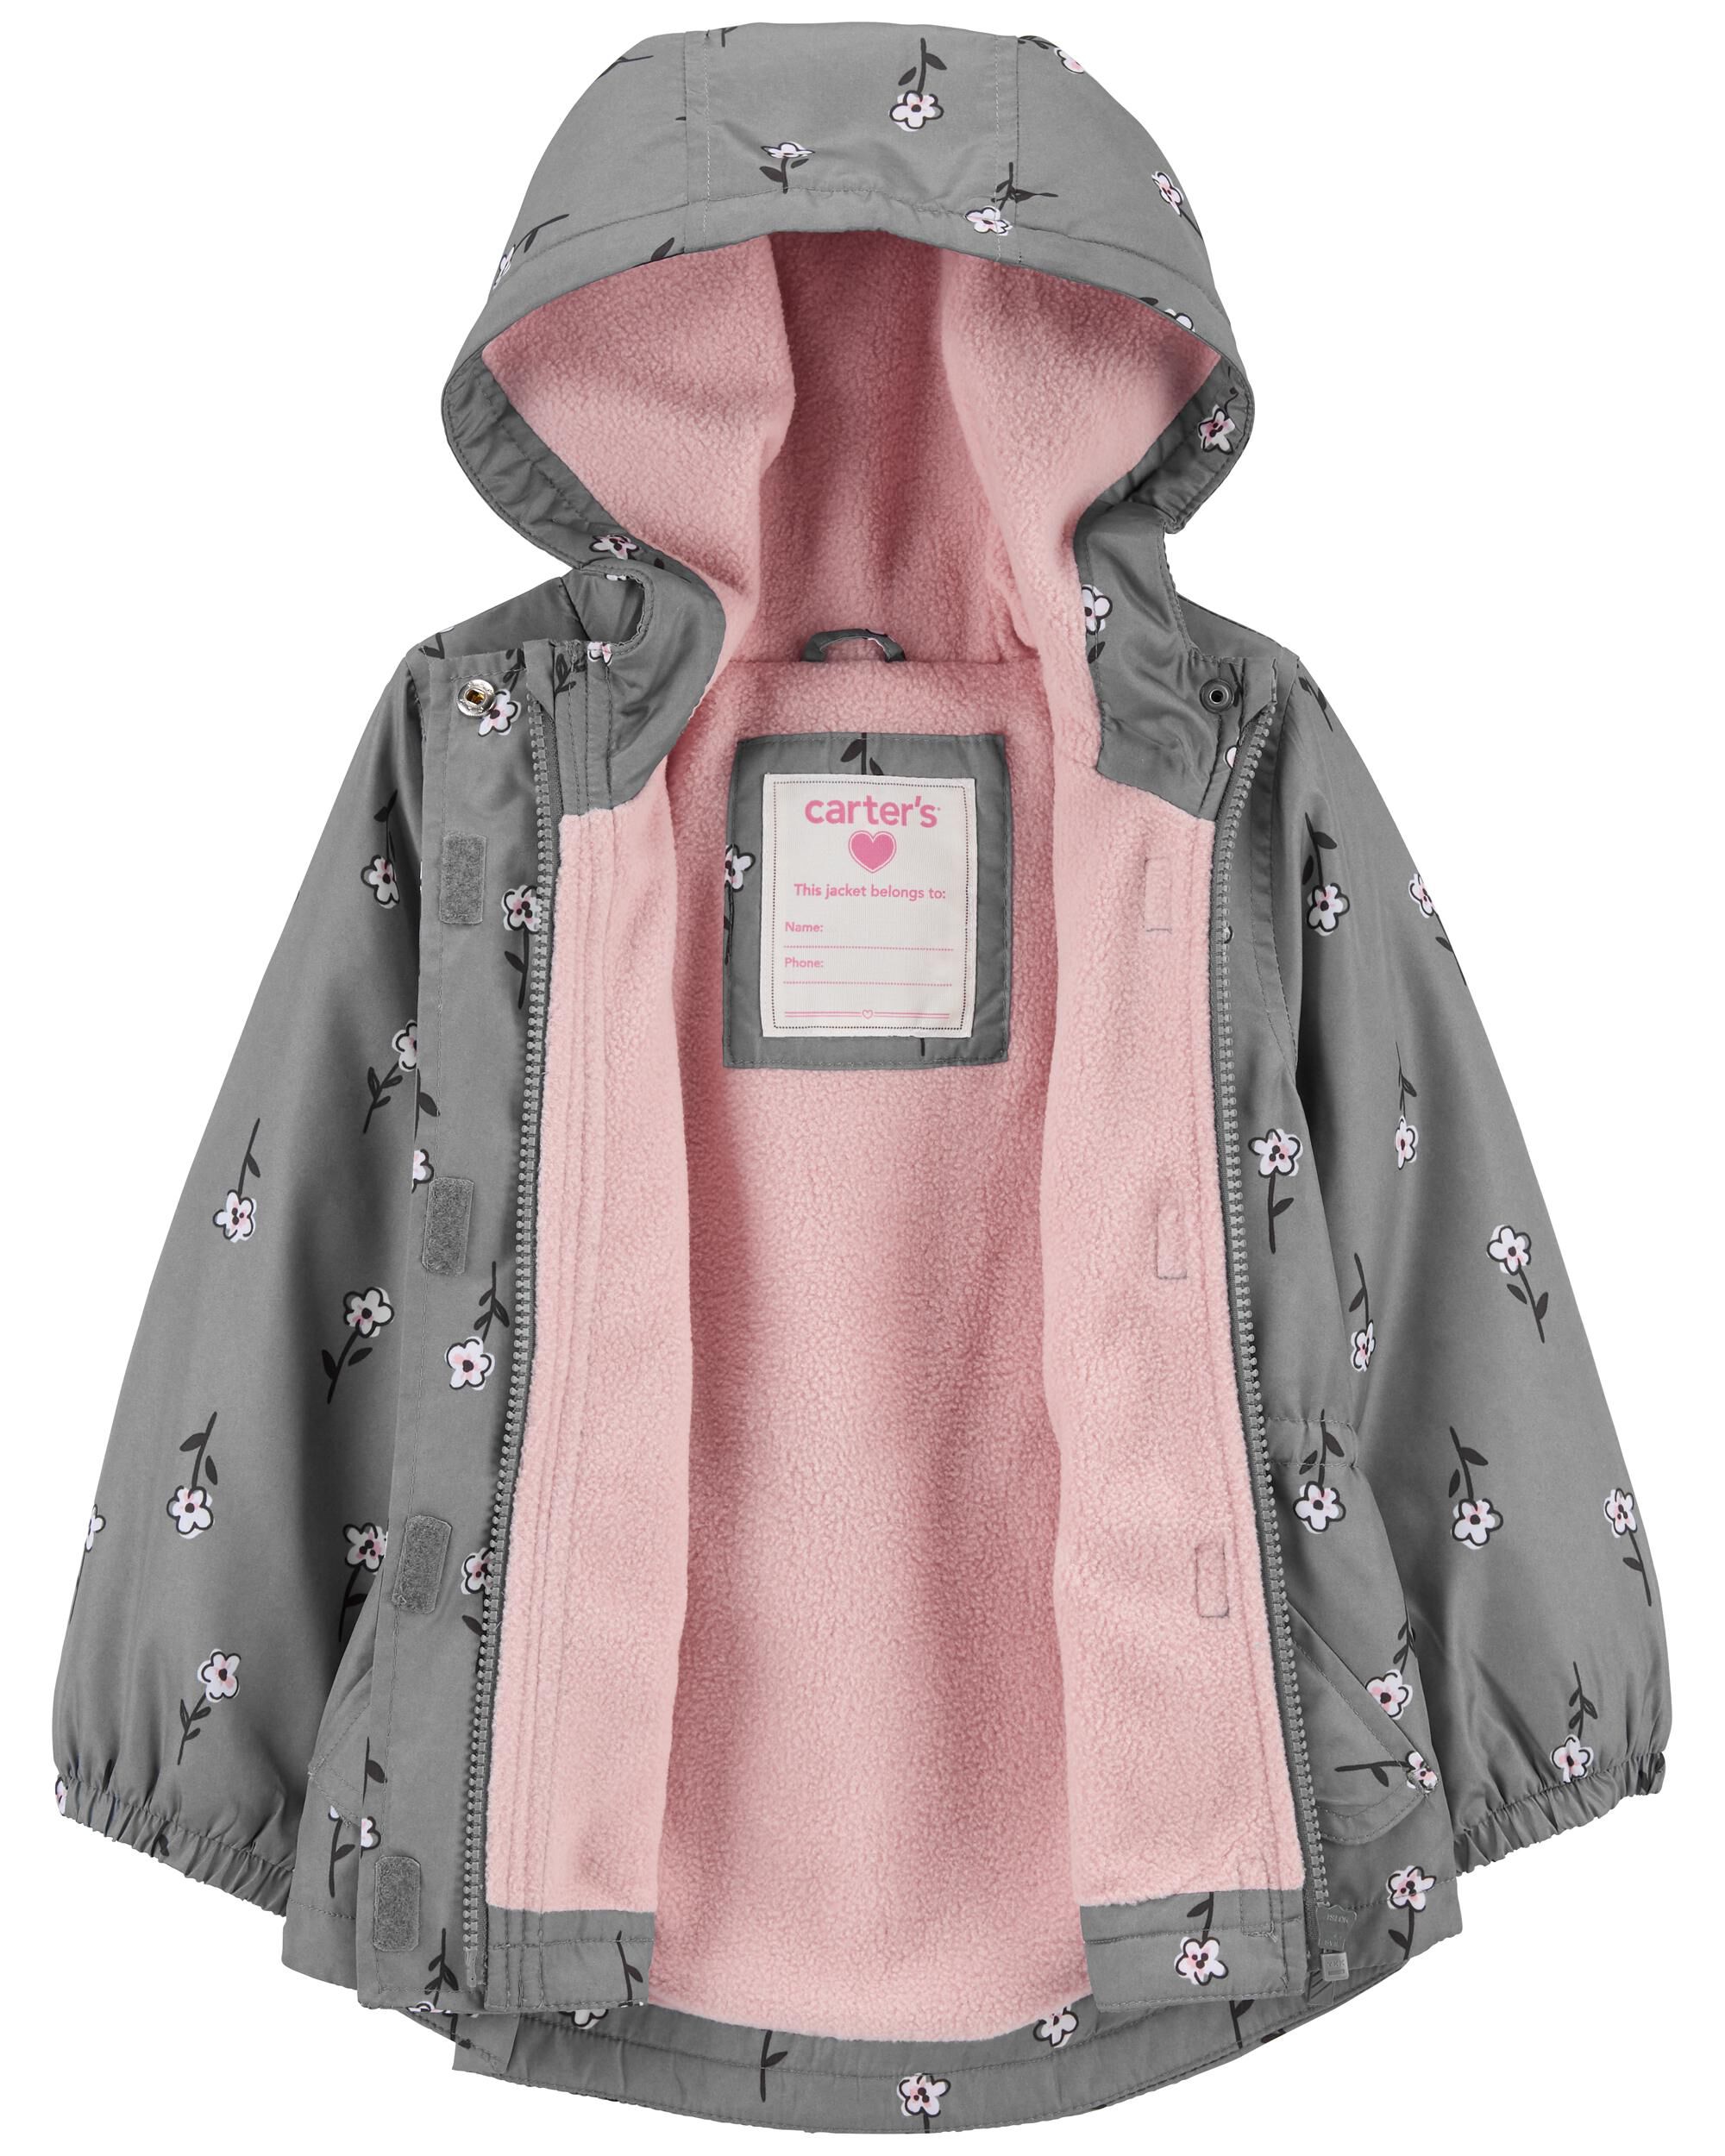 Carter's Toddler Girls' Poppy Red Fleece Lined Jacket Size 2T 3T 4T 